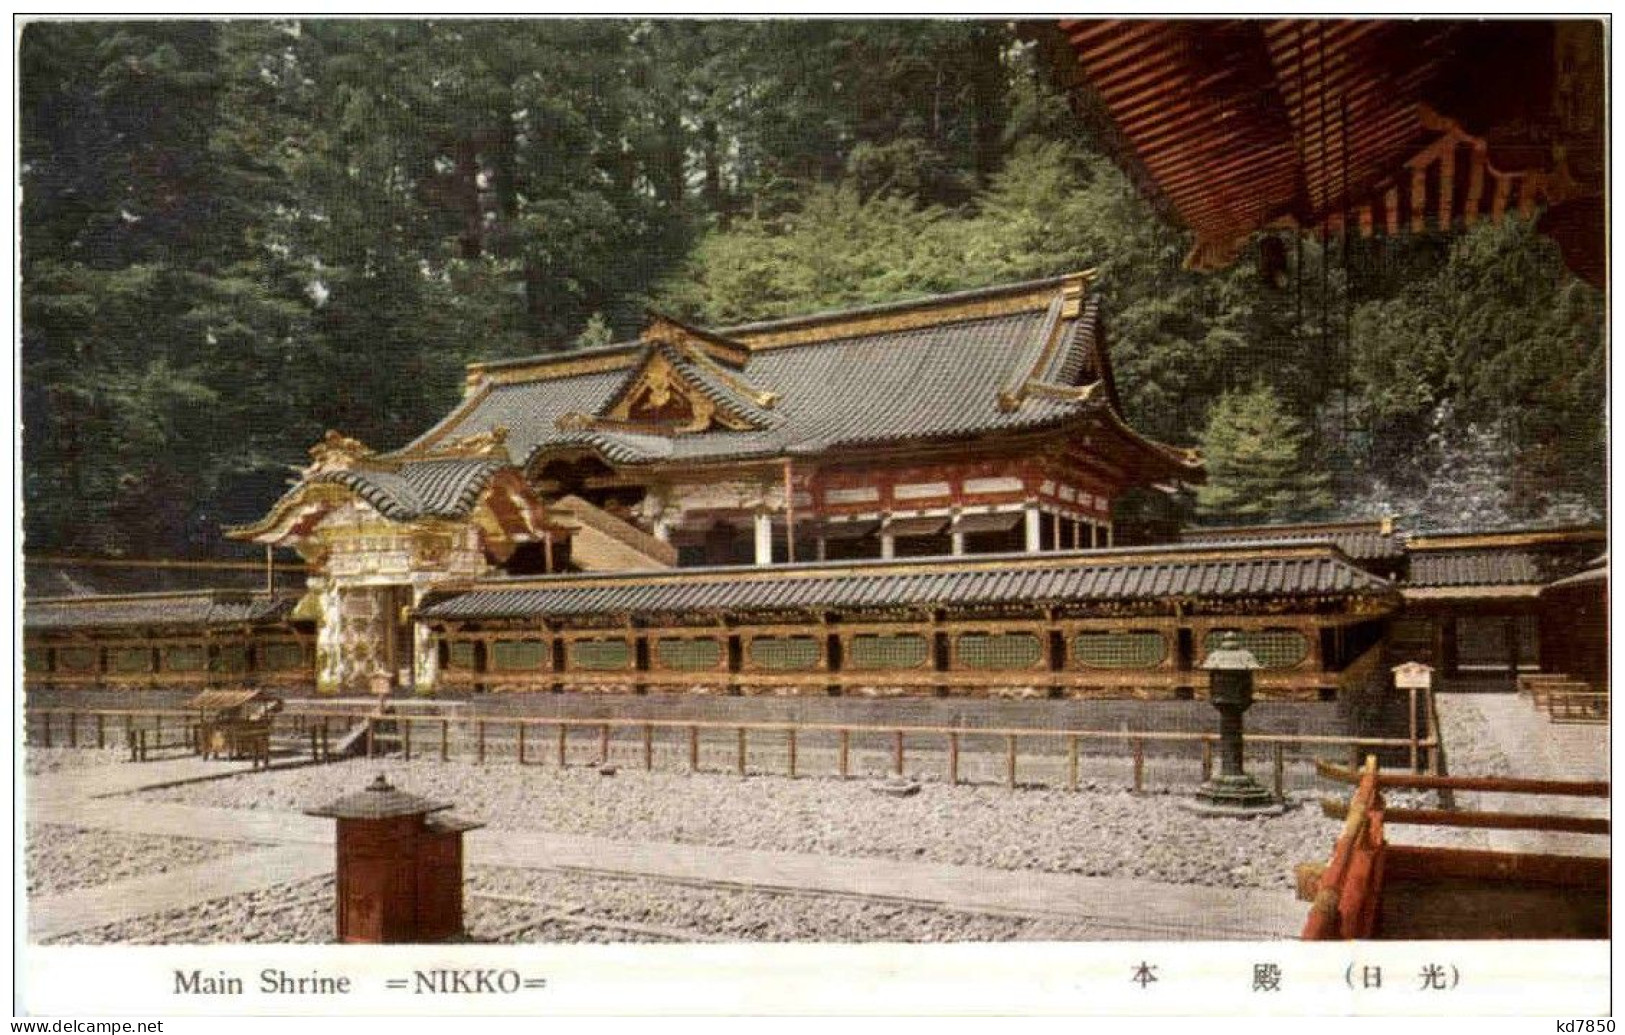 Nikko Main Shrine - Tokyo